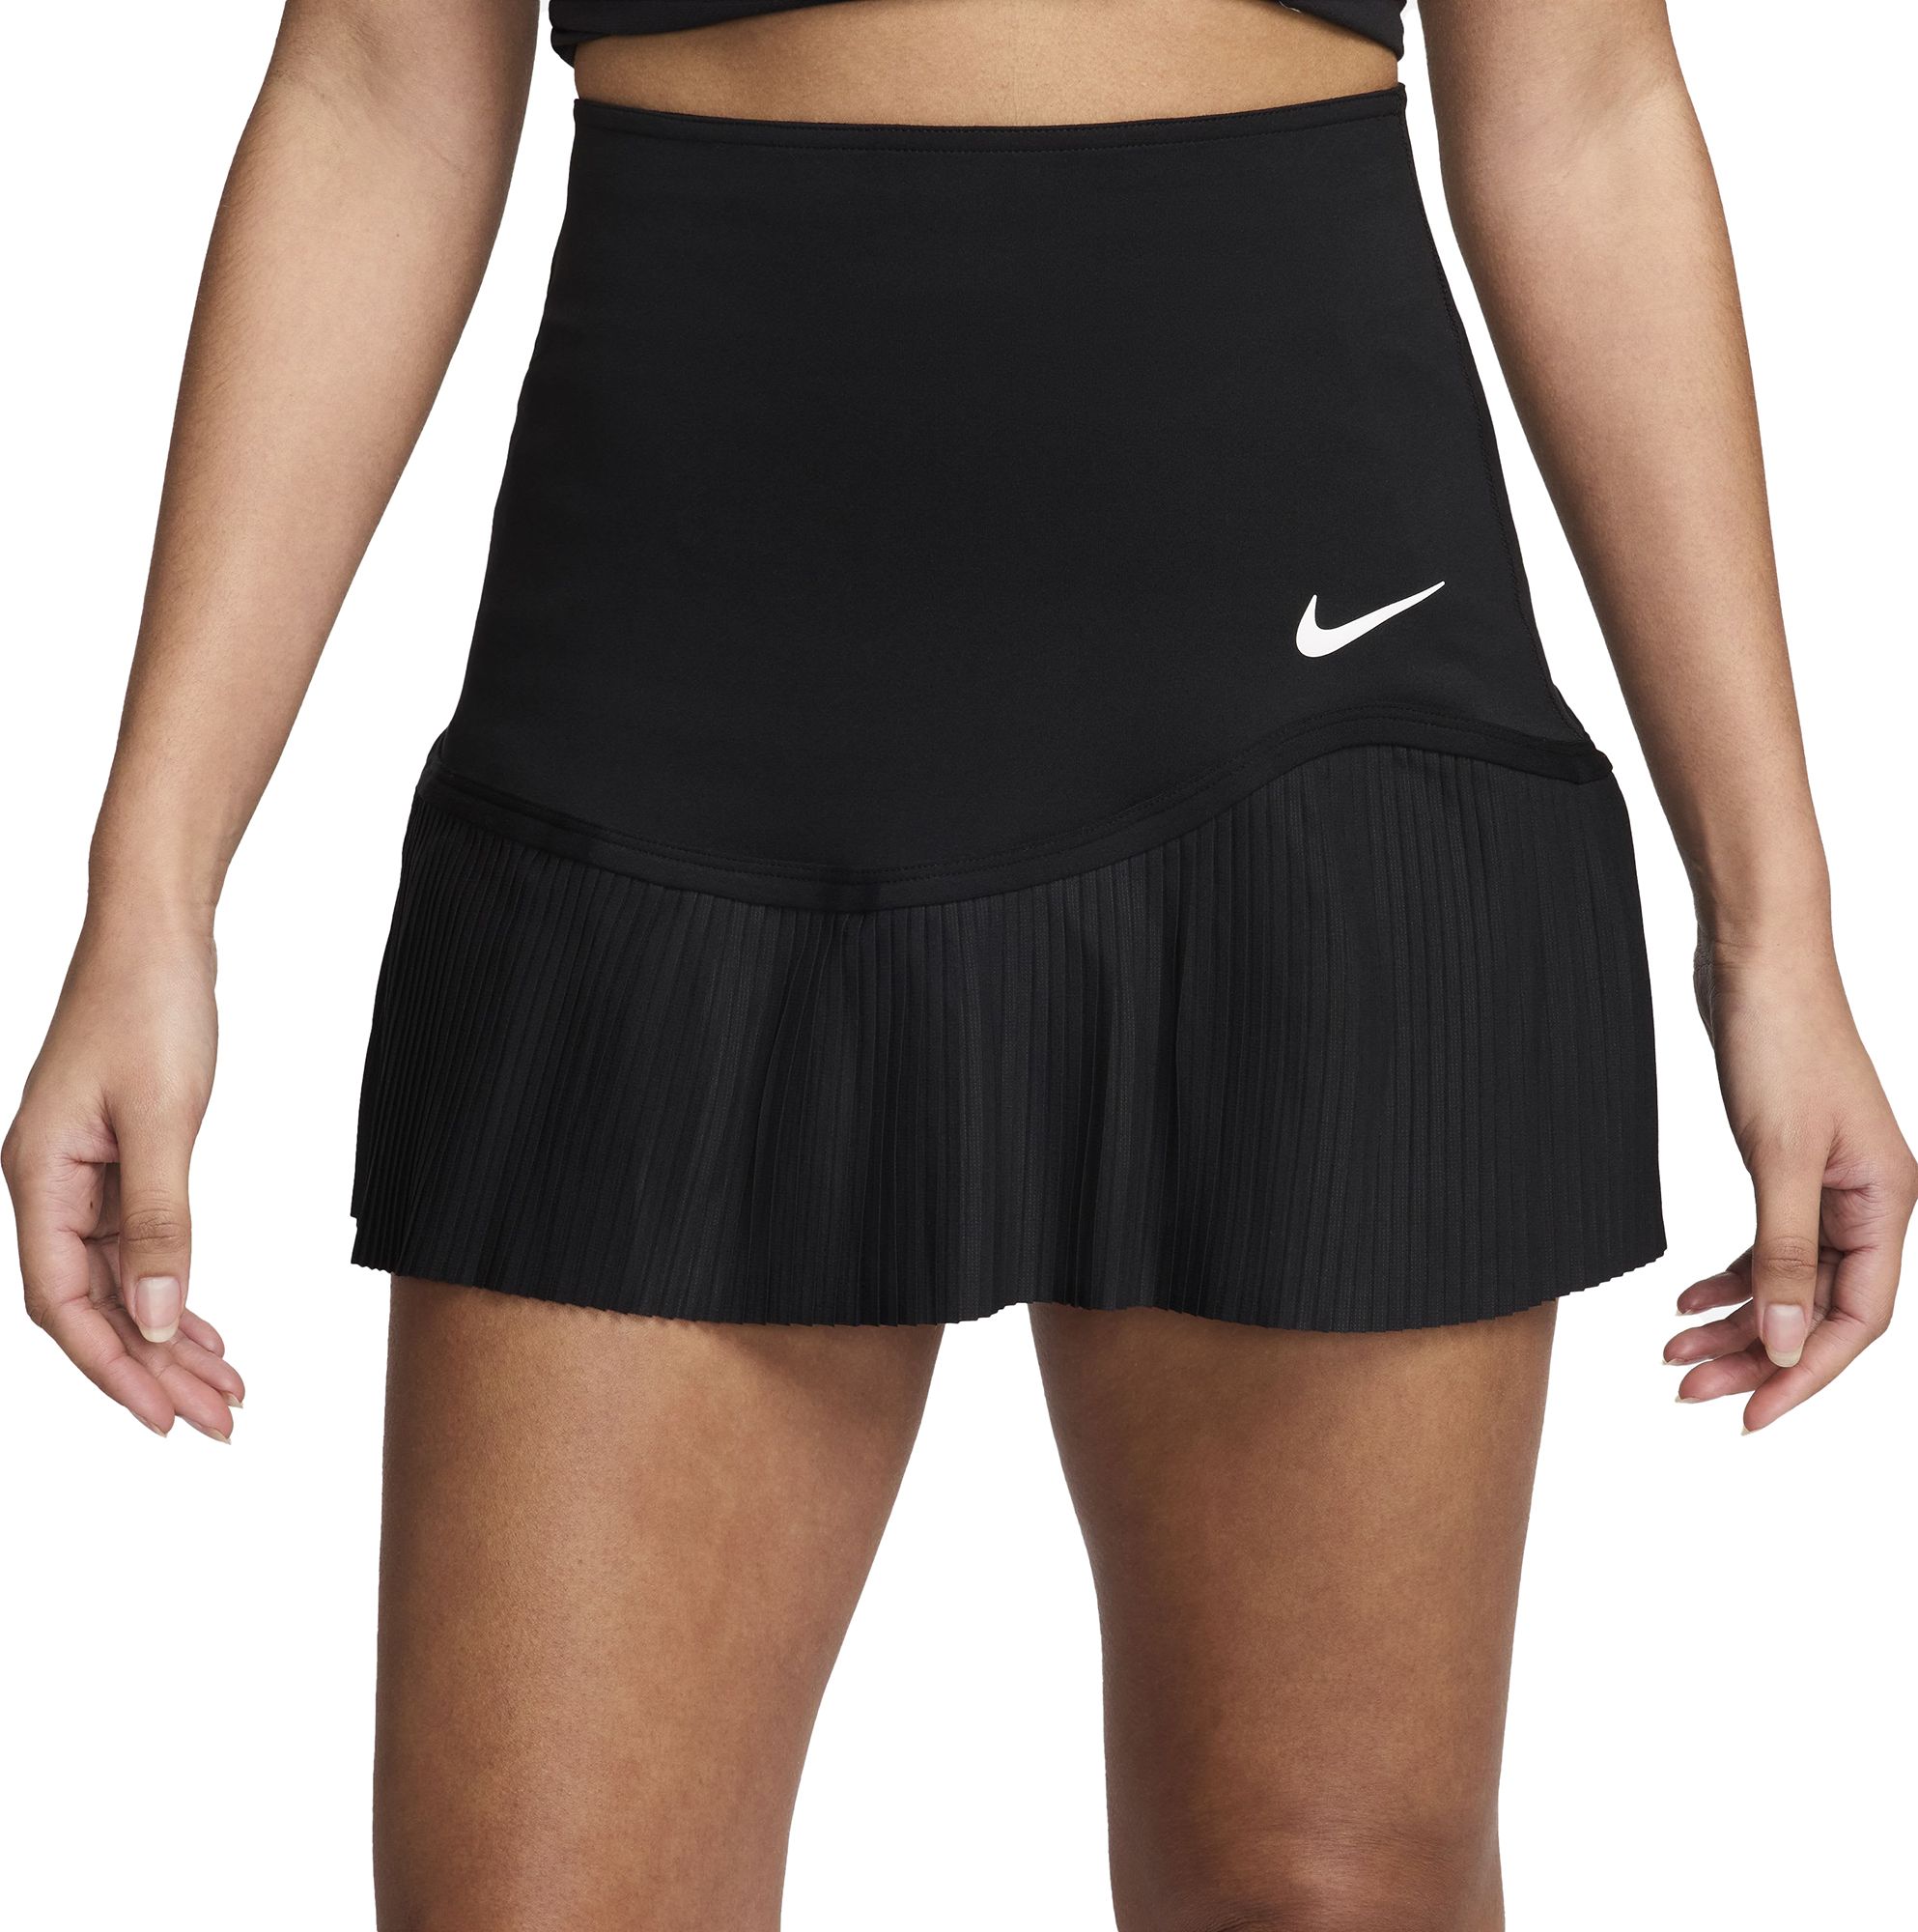 Nike Women's NikeCourt Dri-FIT Advantage Tennis Skirt